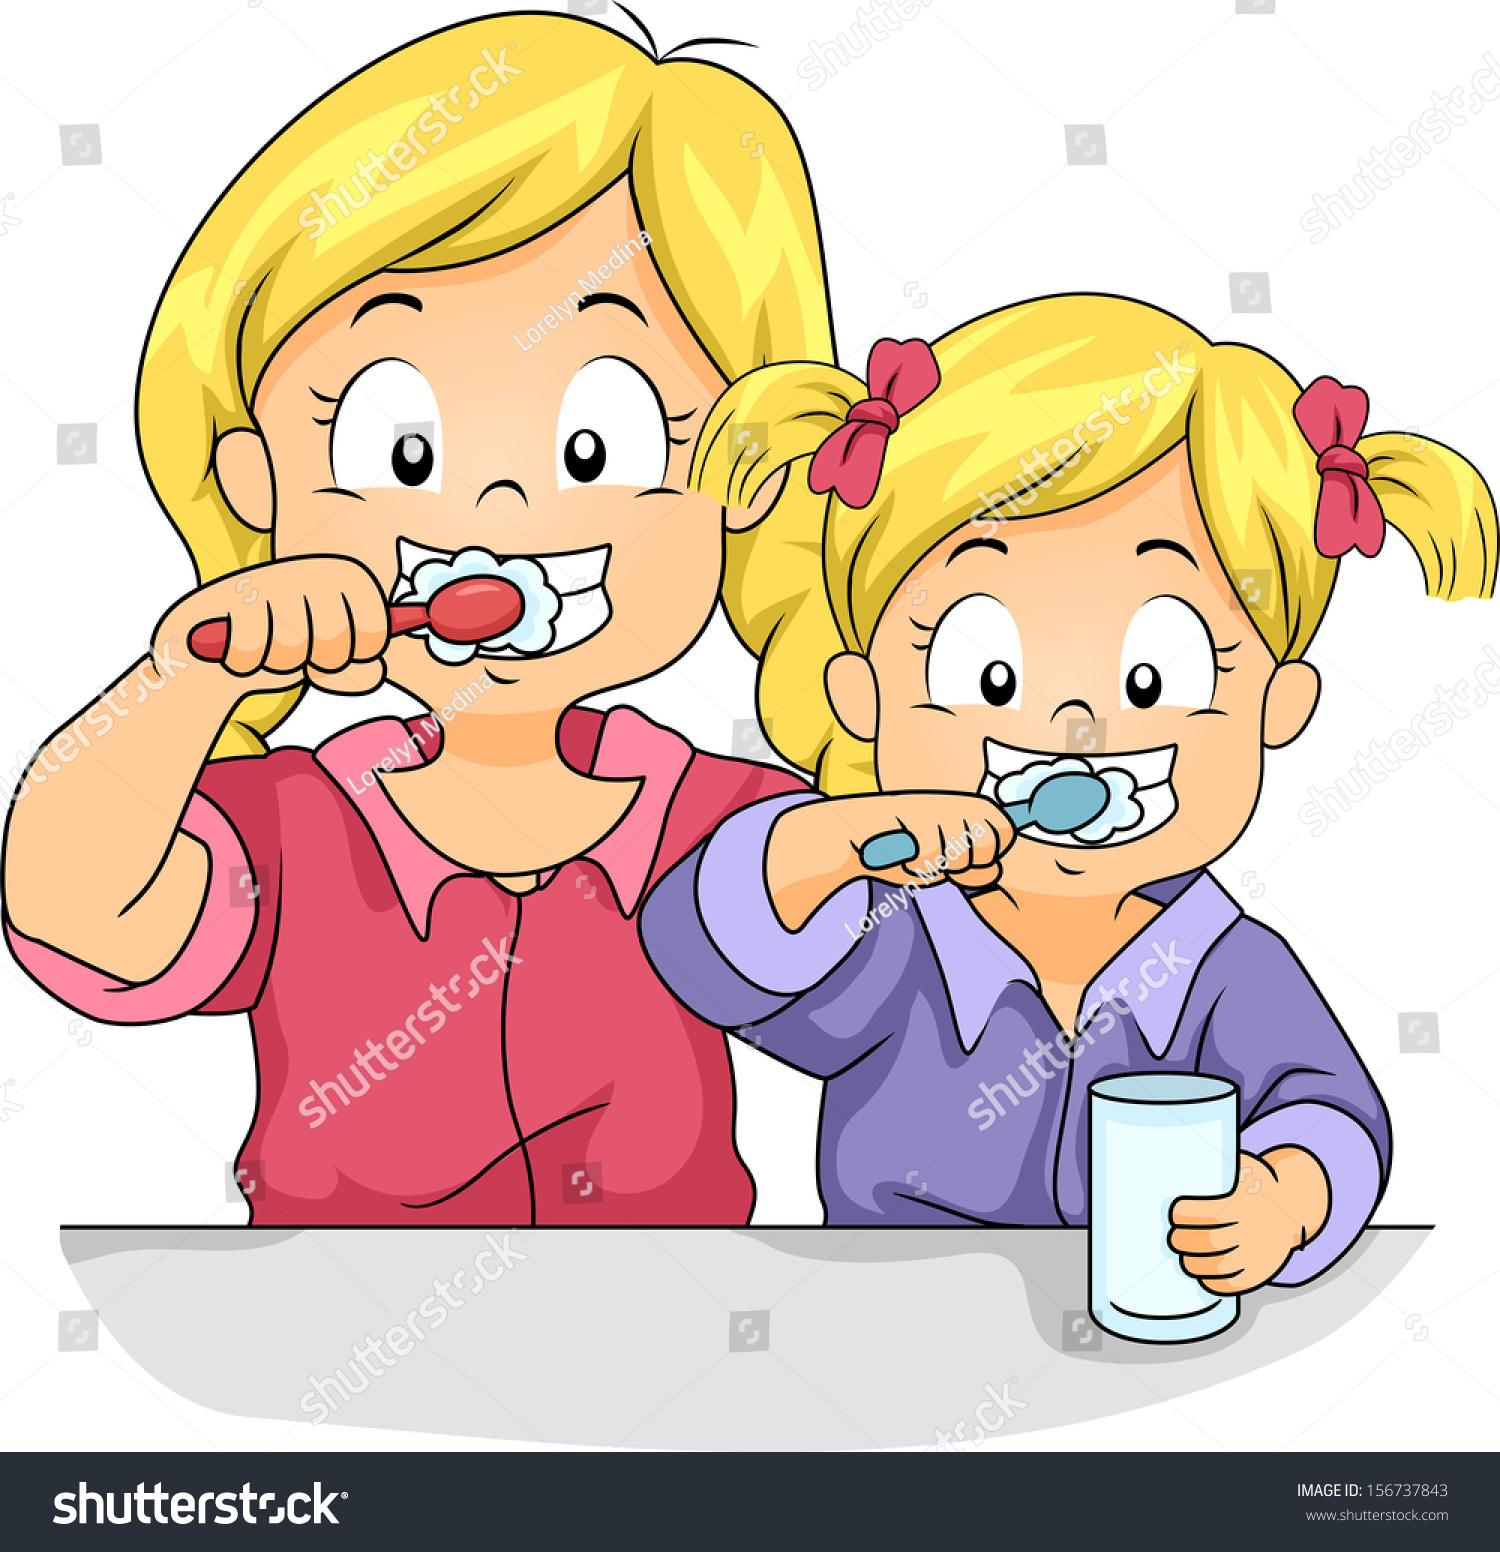 clipart girl brushing teeth - photo #18